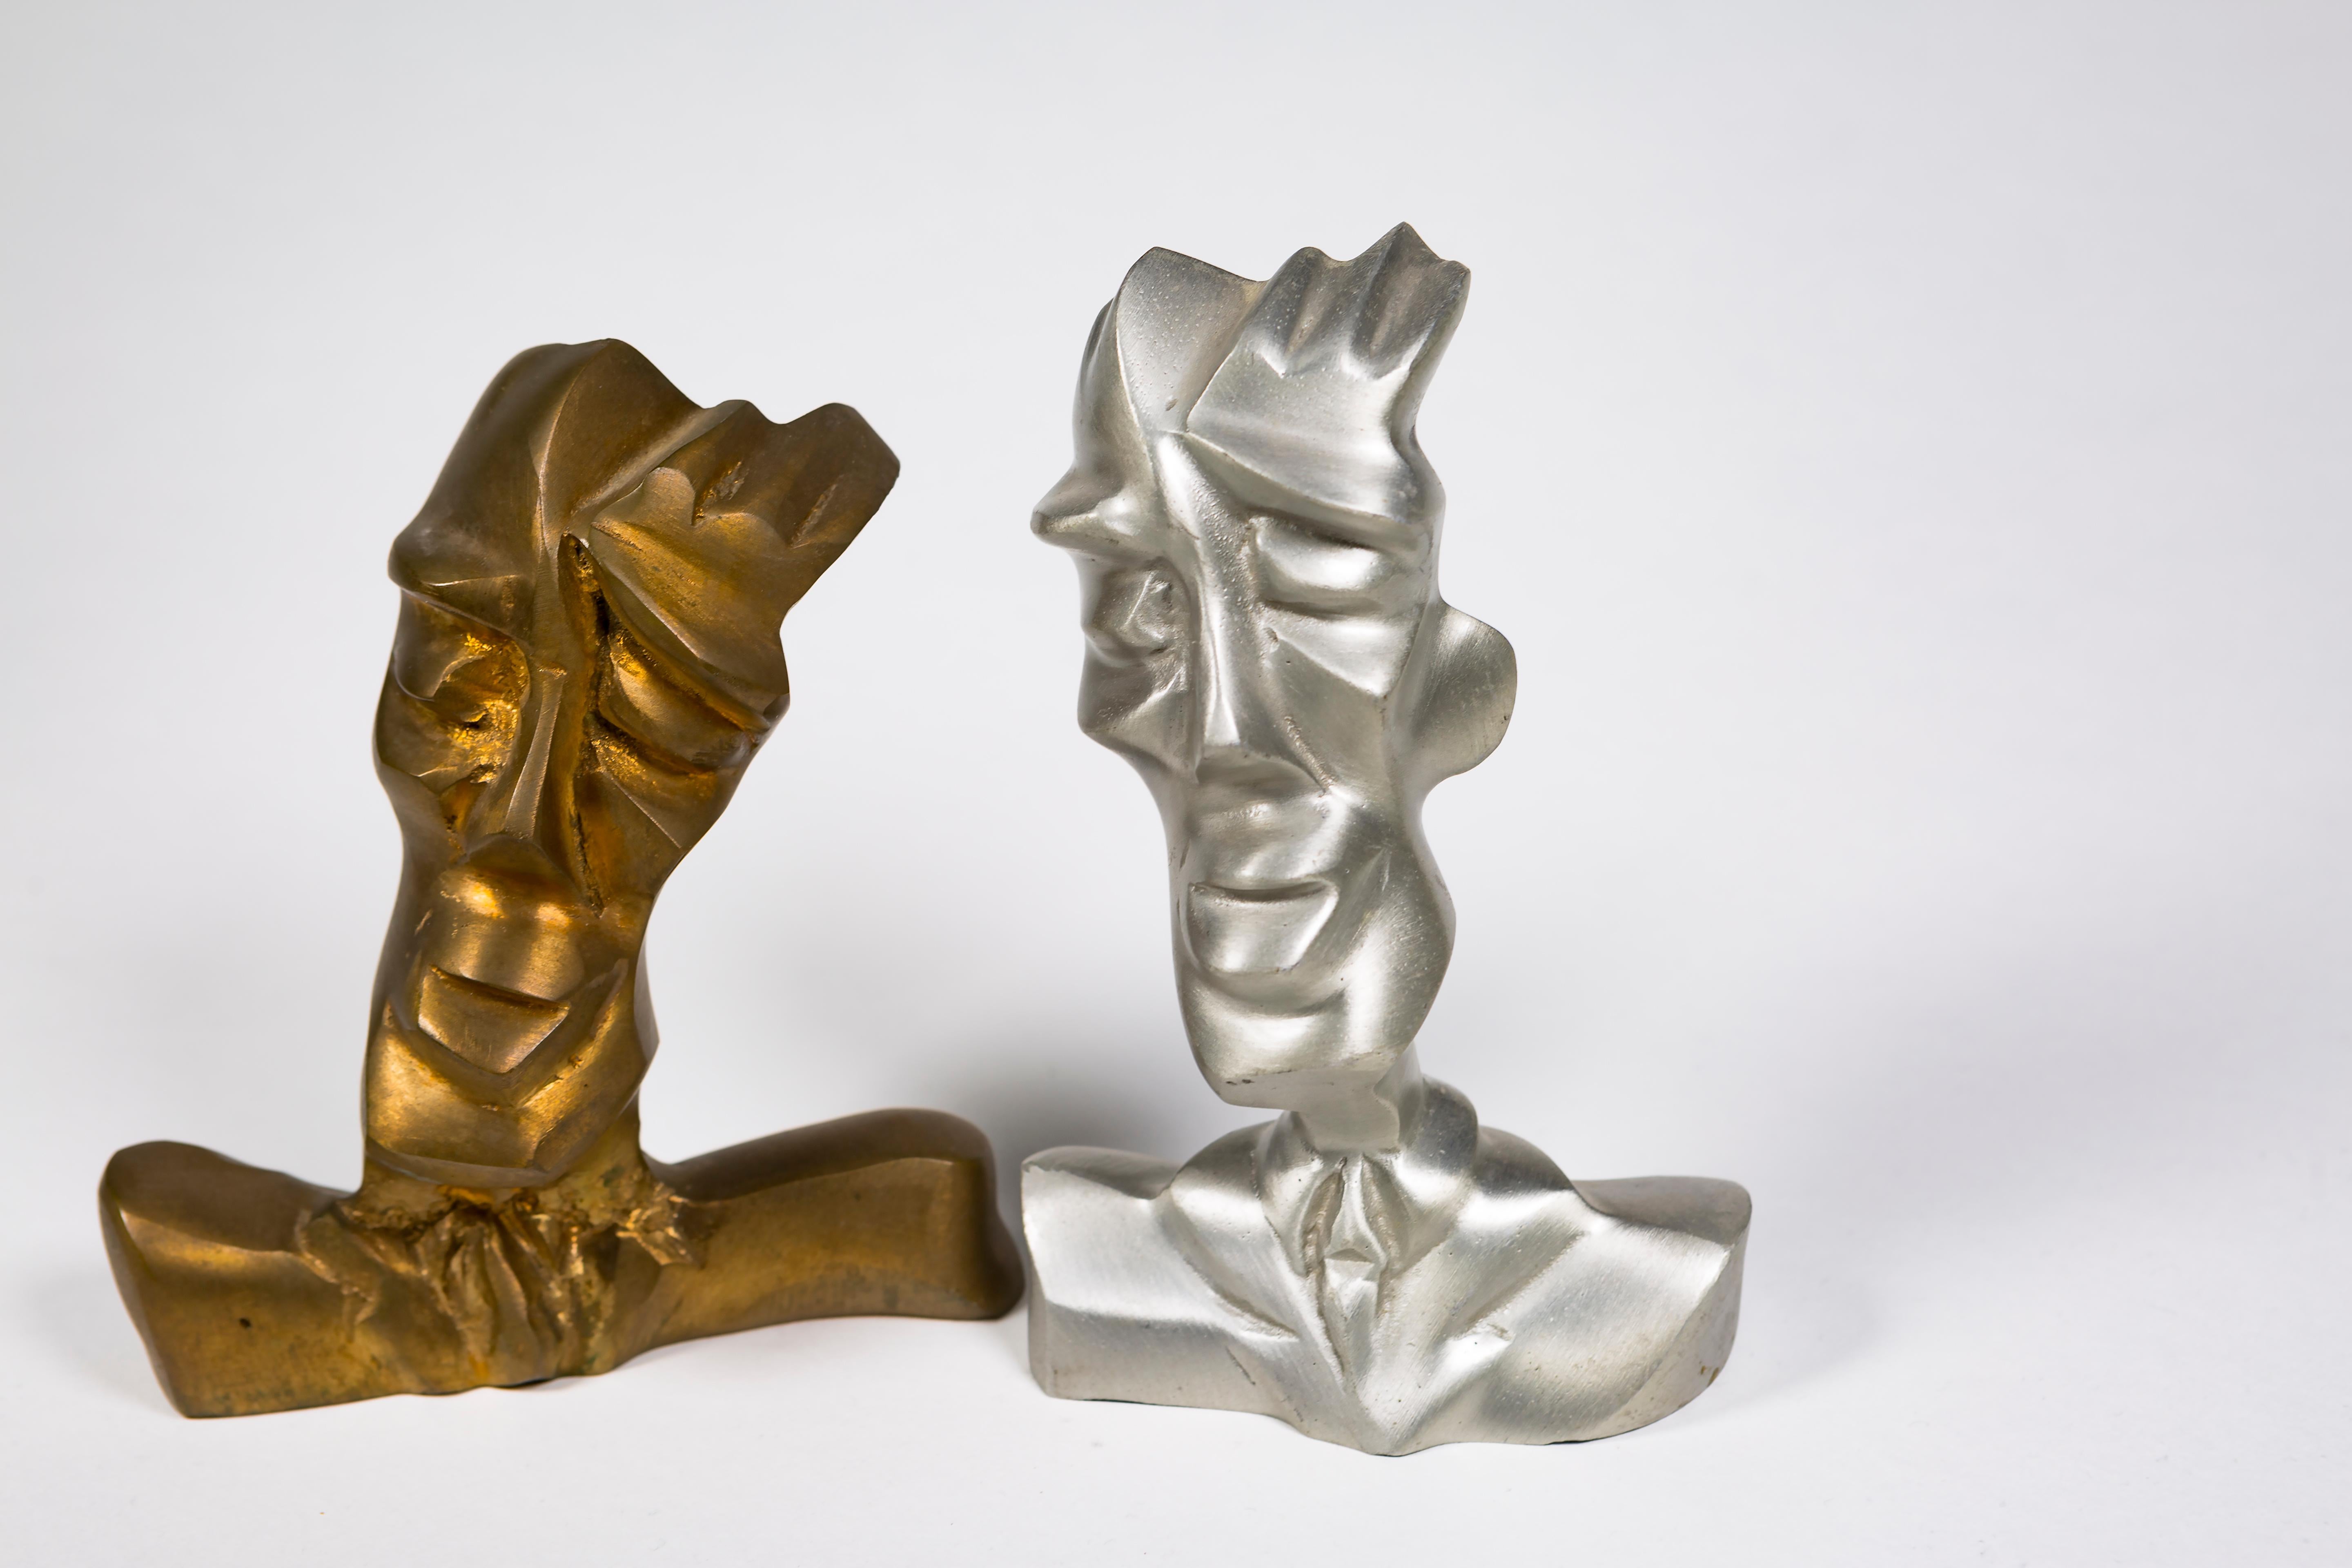 Hand-Carved Jordan Mozer, Chet, Iridium Jazzclub NY, Carved, Cast Recycled Bronze, USA, 1992 For Sale